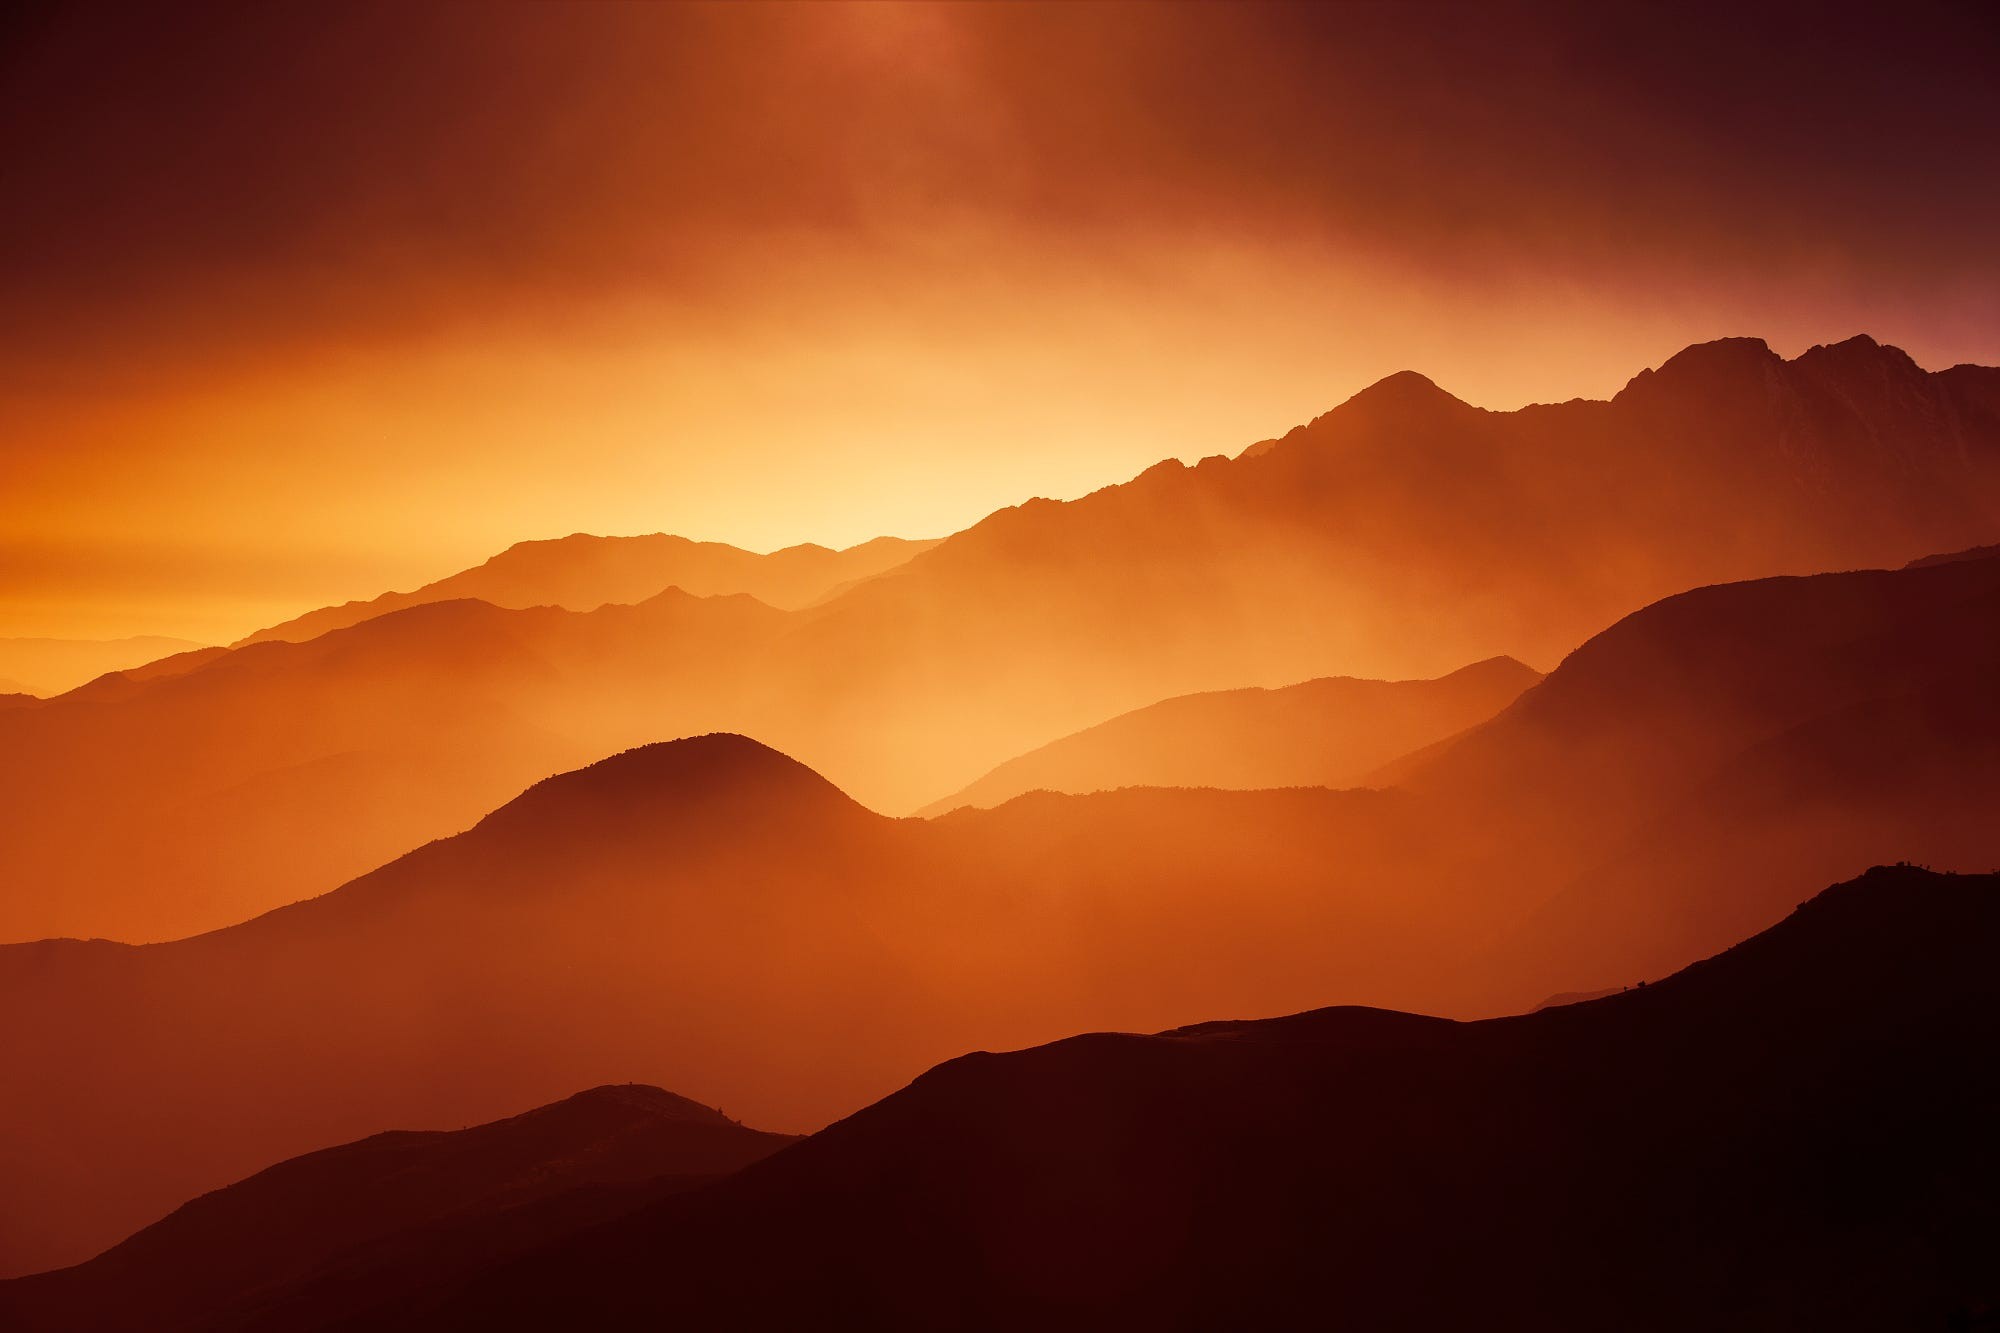 General 2000x1333 nature landscape mountains mist sunlight orange red silhouette